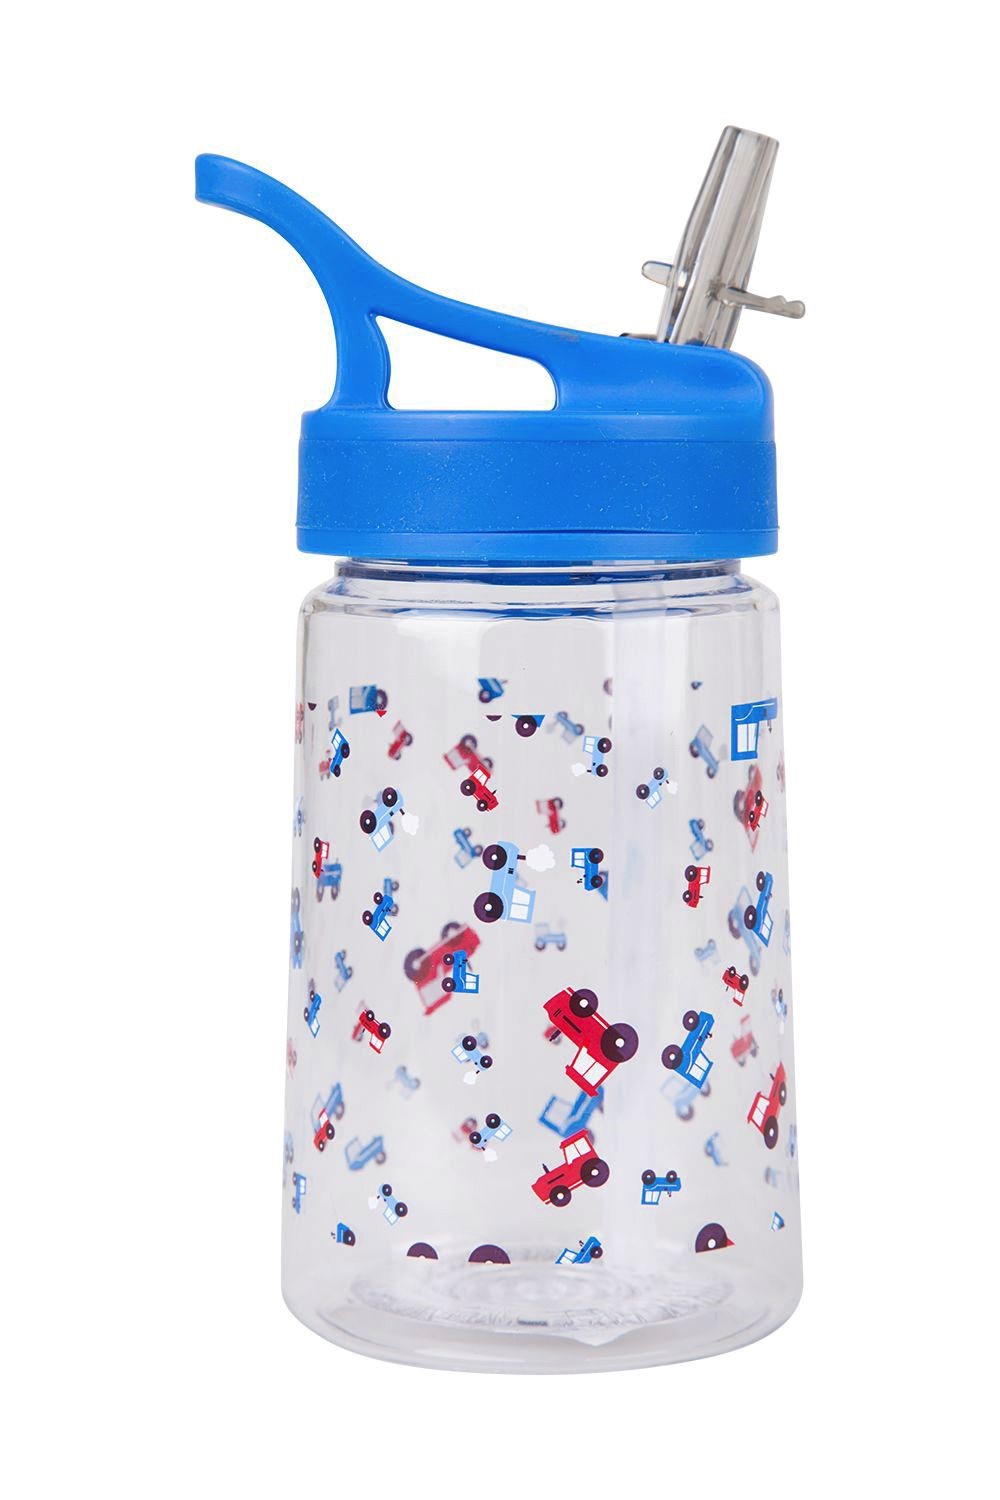 Children's water bottles